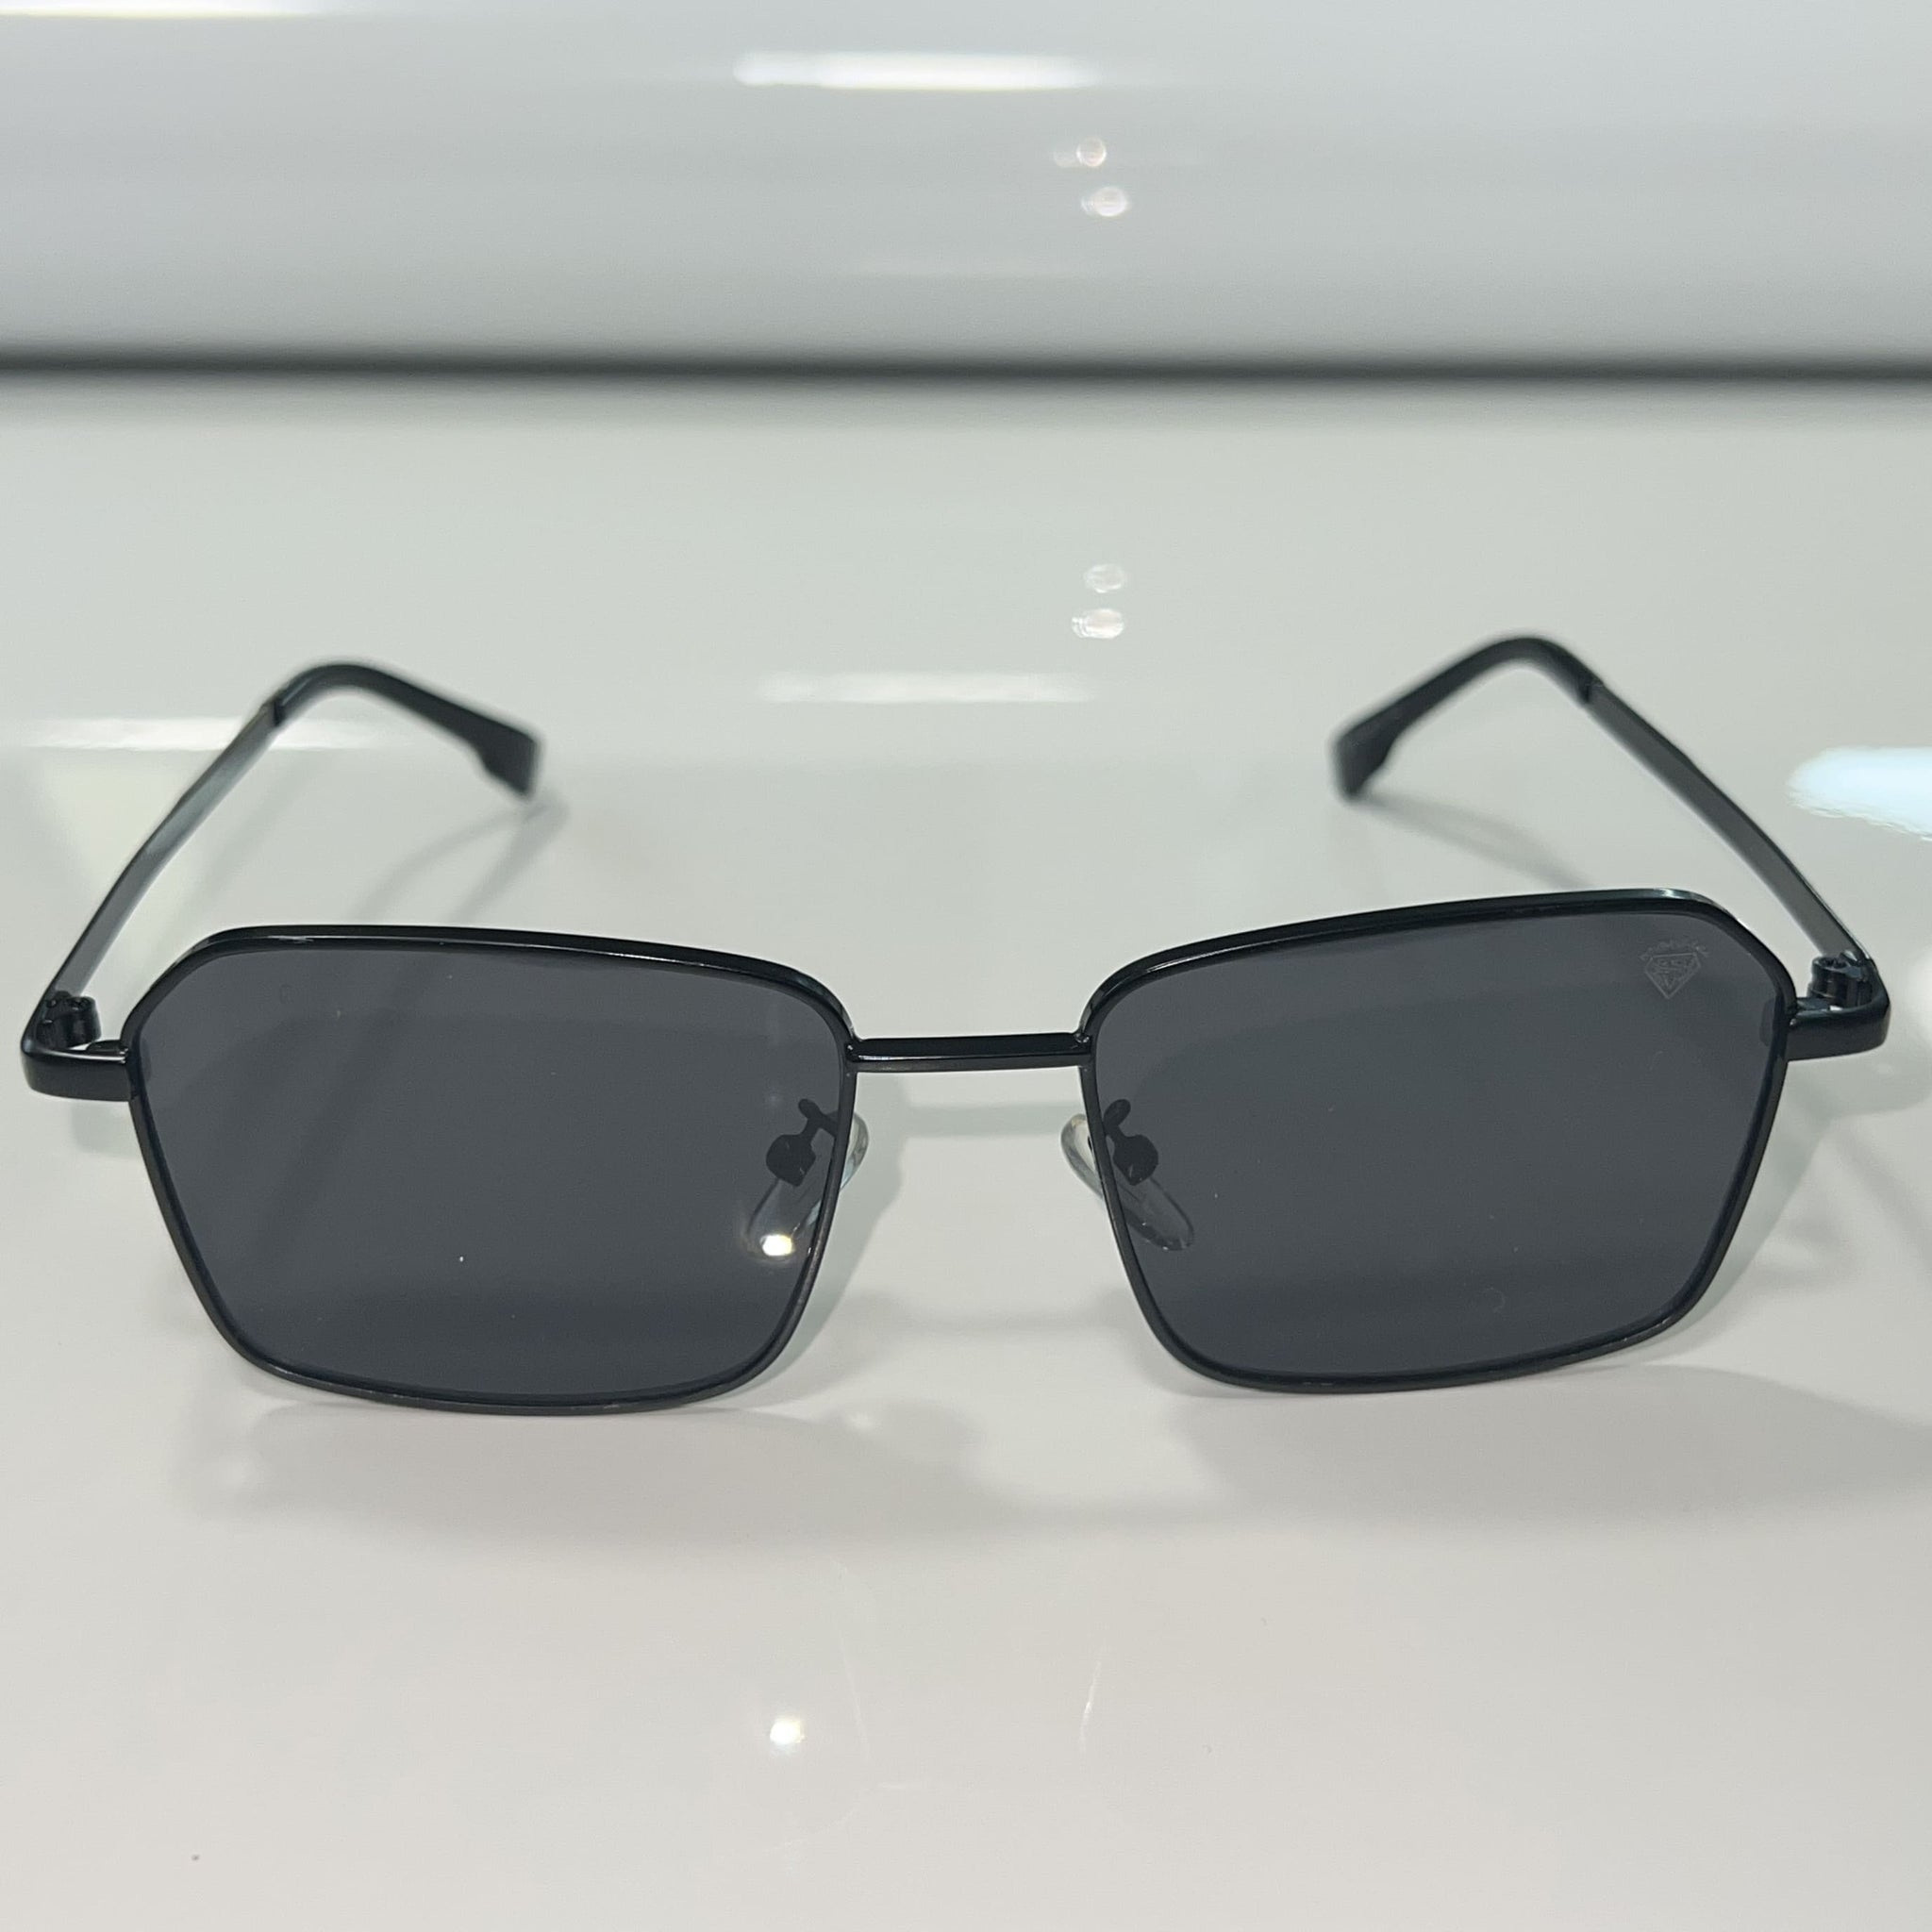 Celebrity Glasses -  Sehgal Glasses - Black Shade